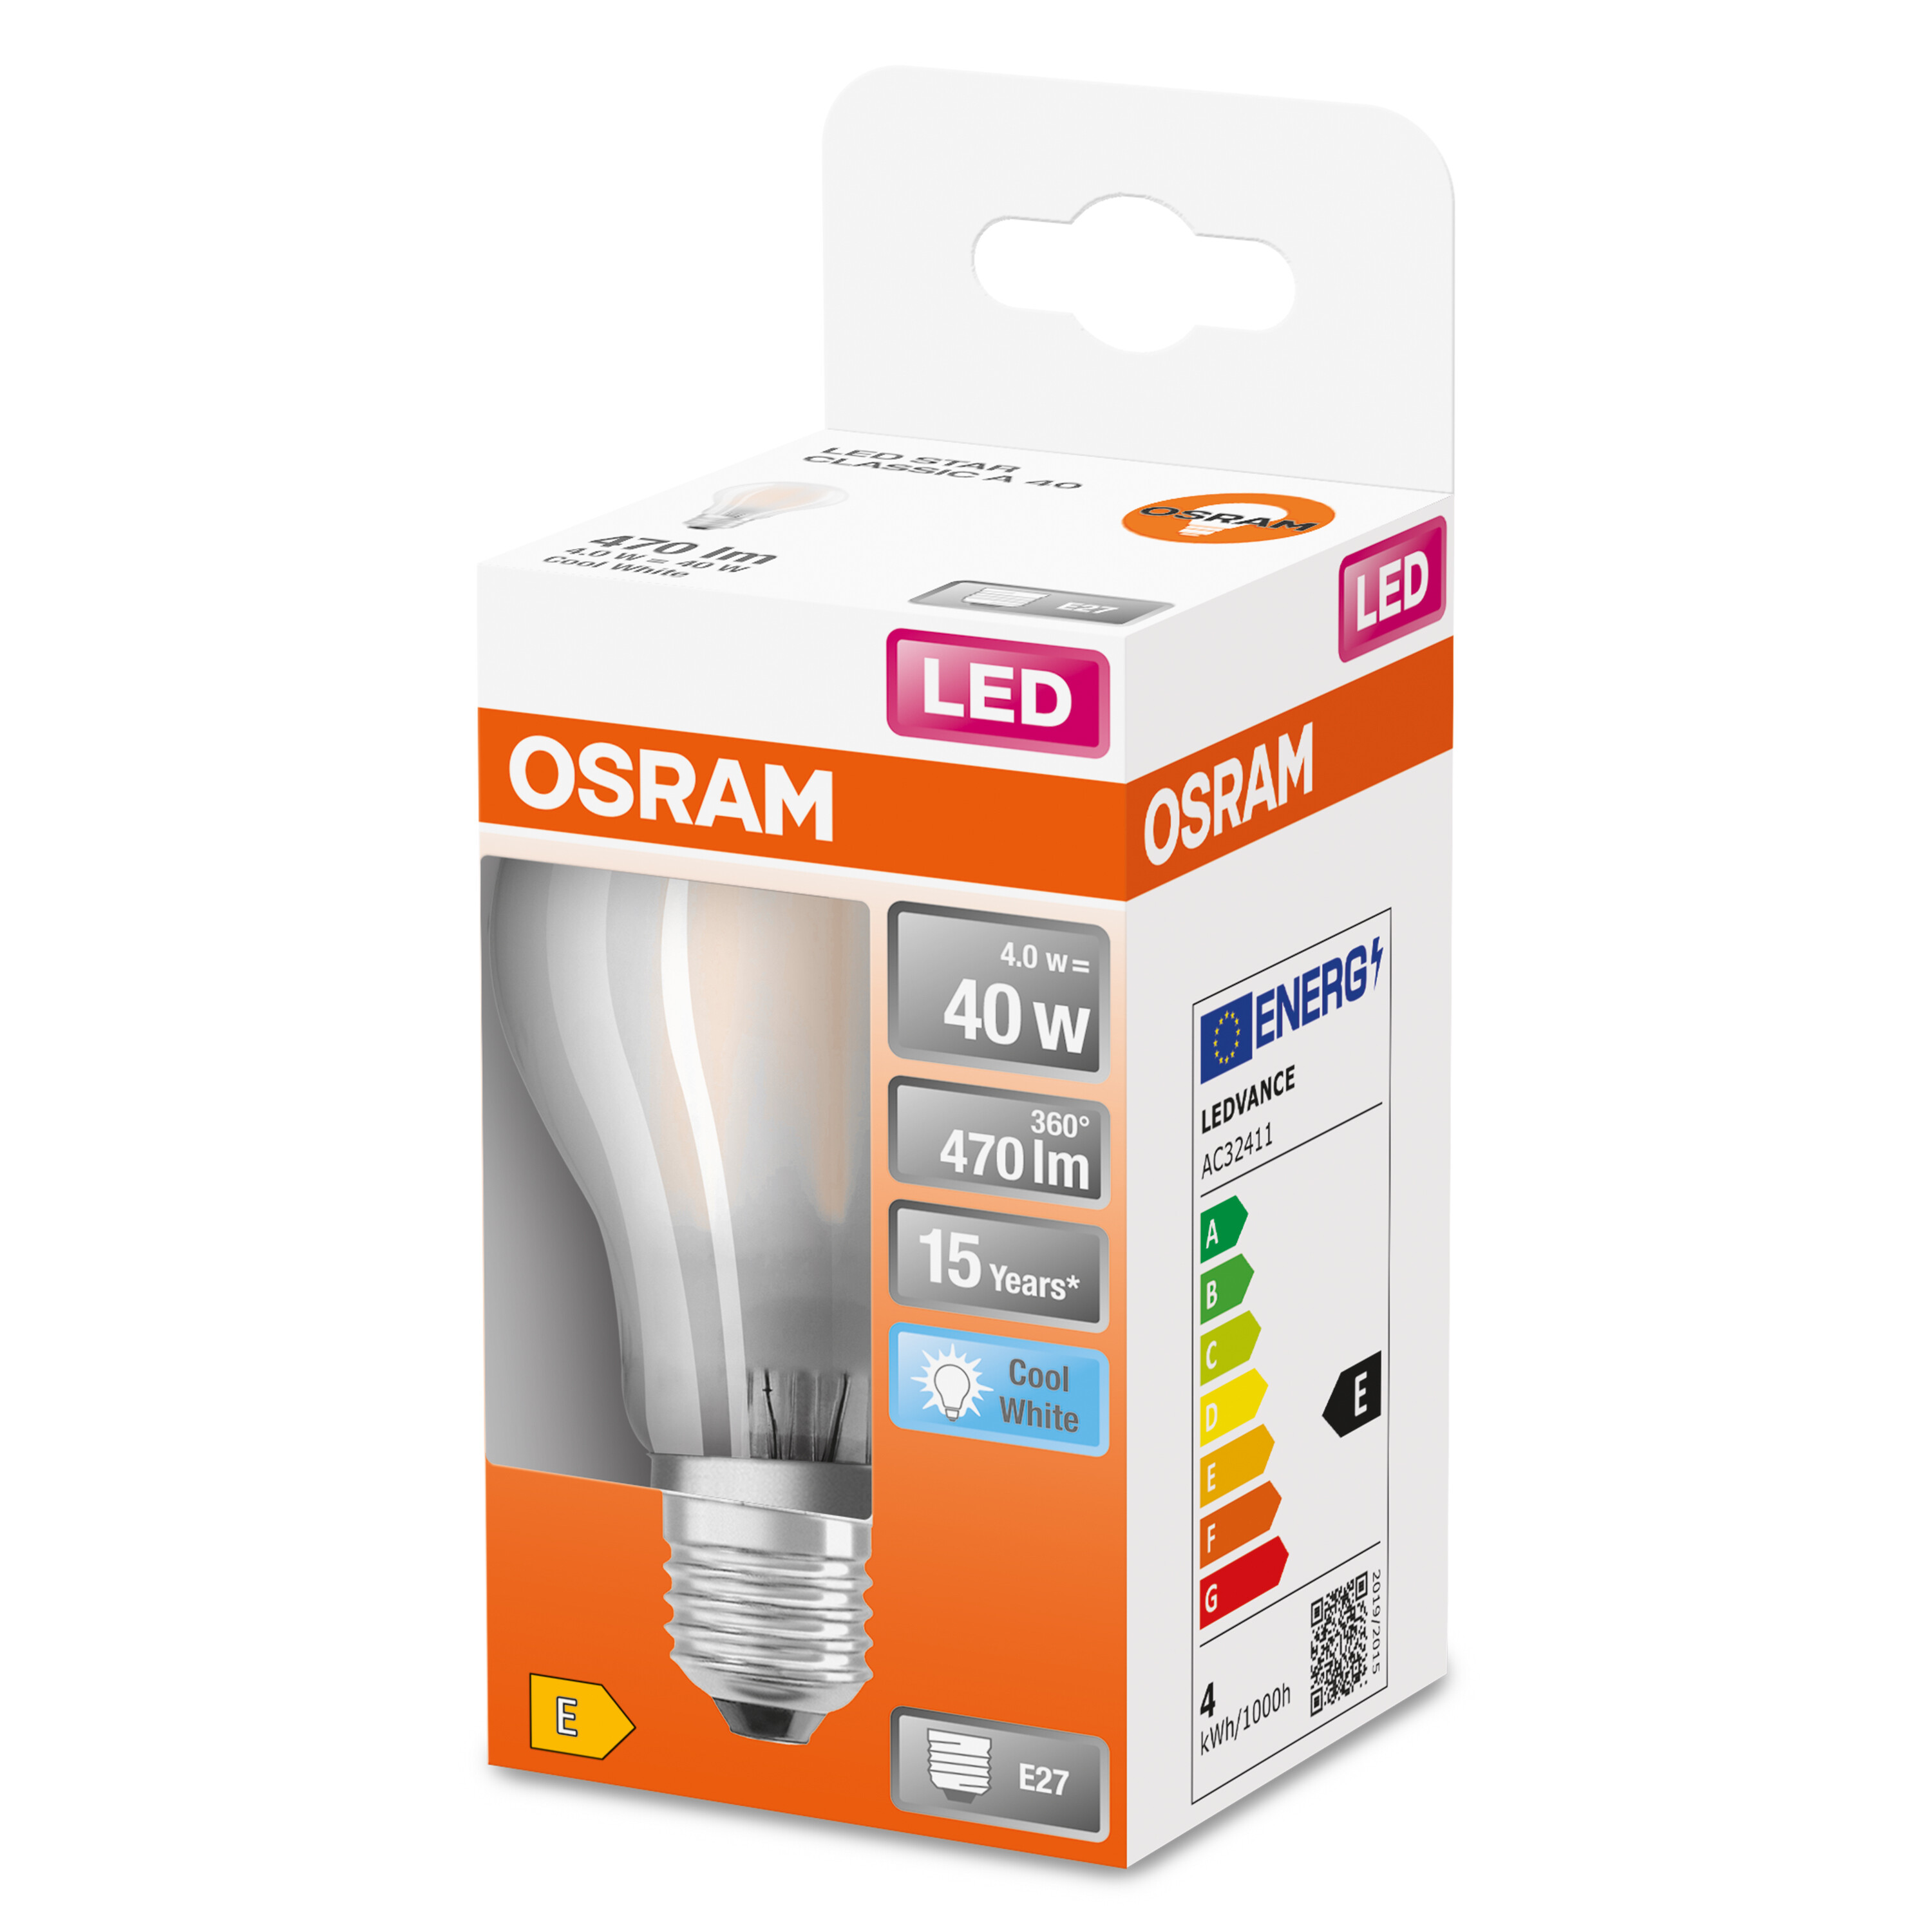 OSRAM  LED A Lampe CLASSIC Kaltweiß LED 470 Lumen Retrofit